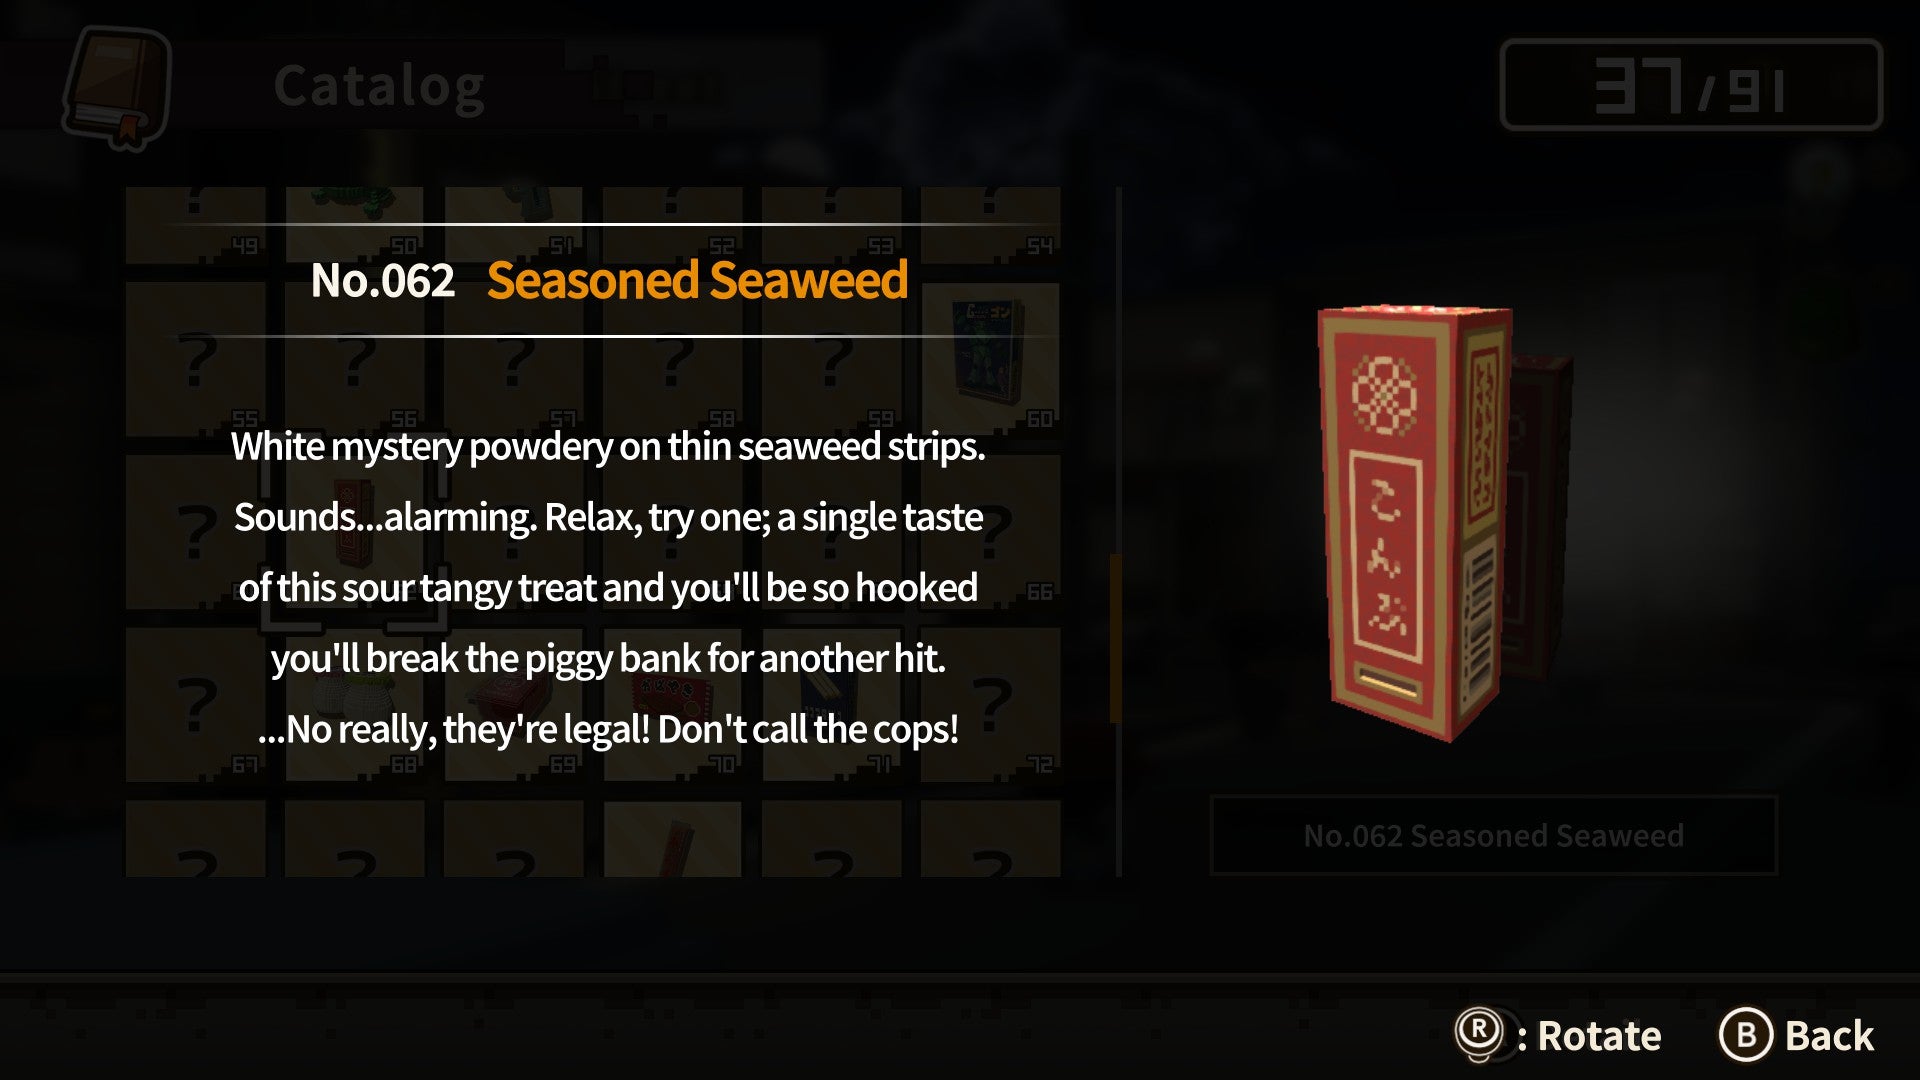 A screen describing seasoned seaweed in The Kids We Were